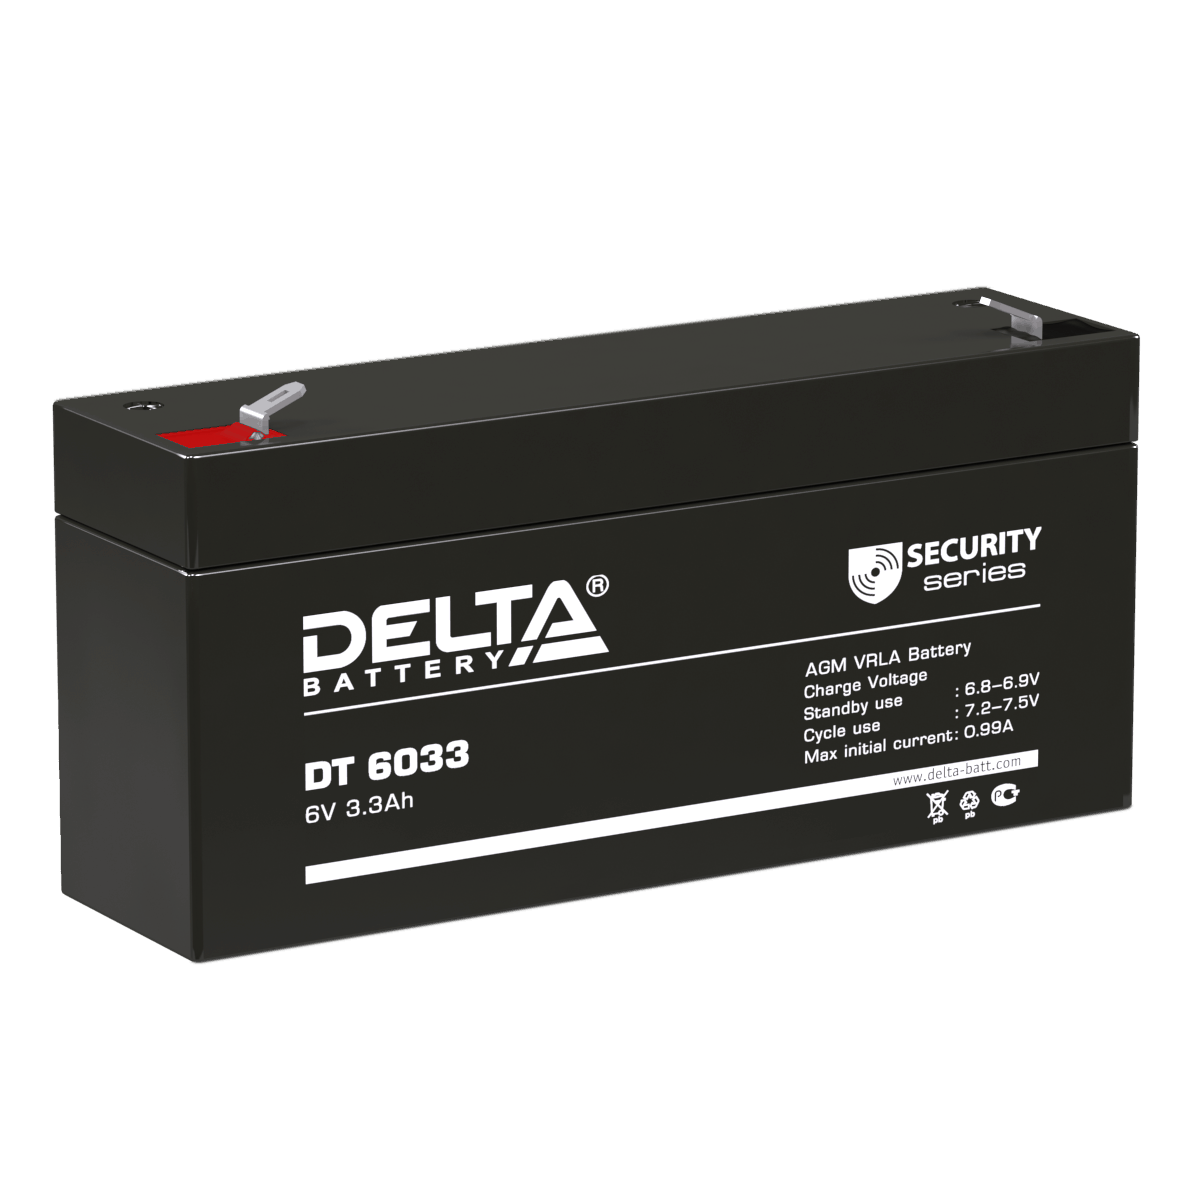 Аккумулятор 3,3а/ч 6В (DT 6033) Delta